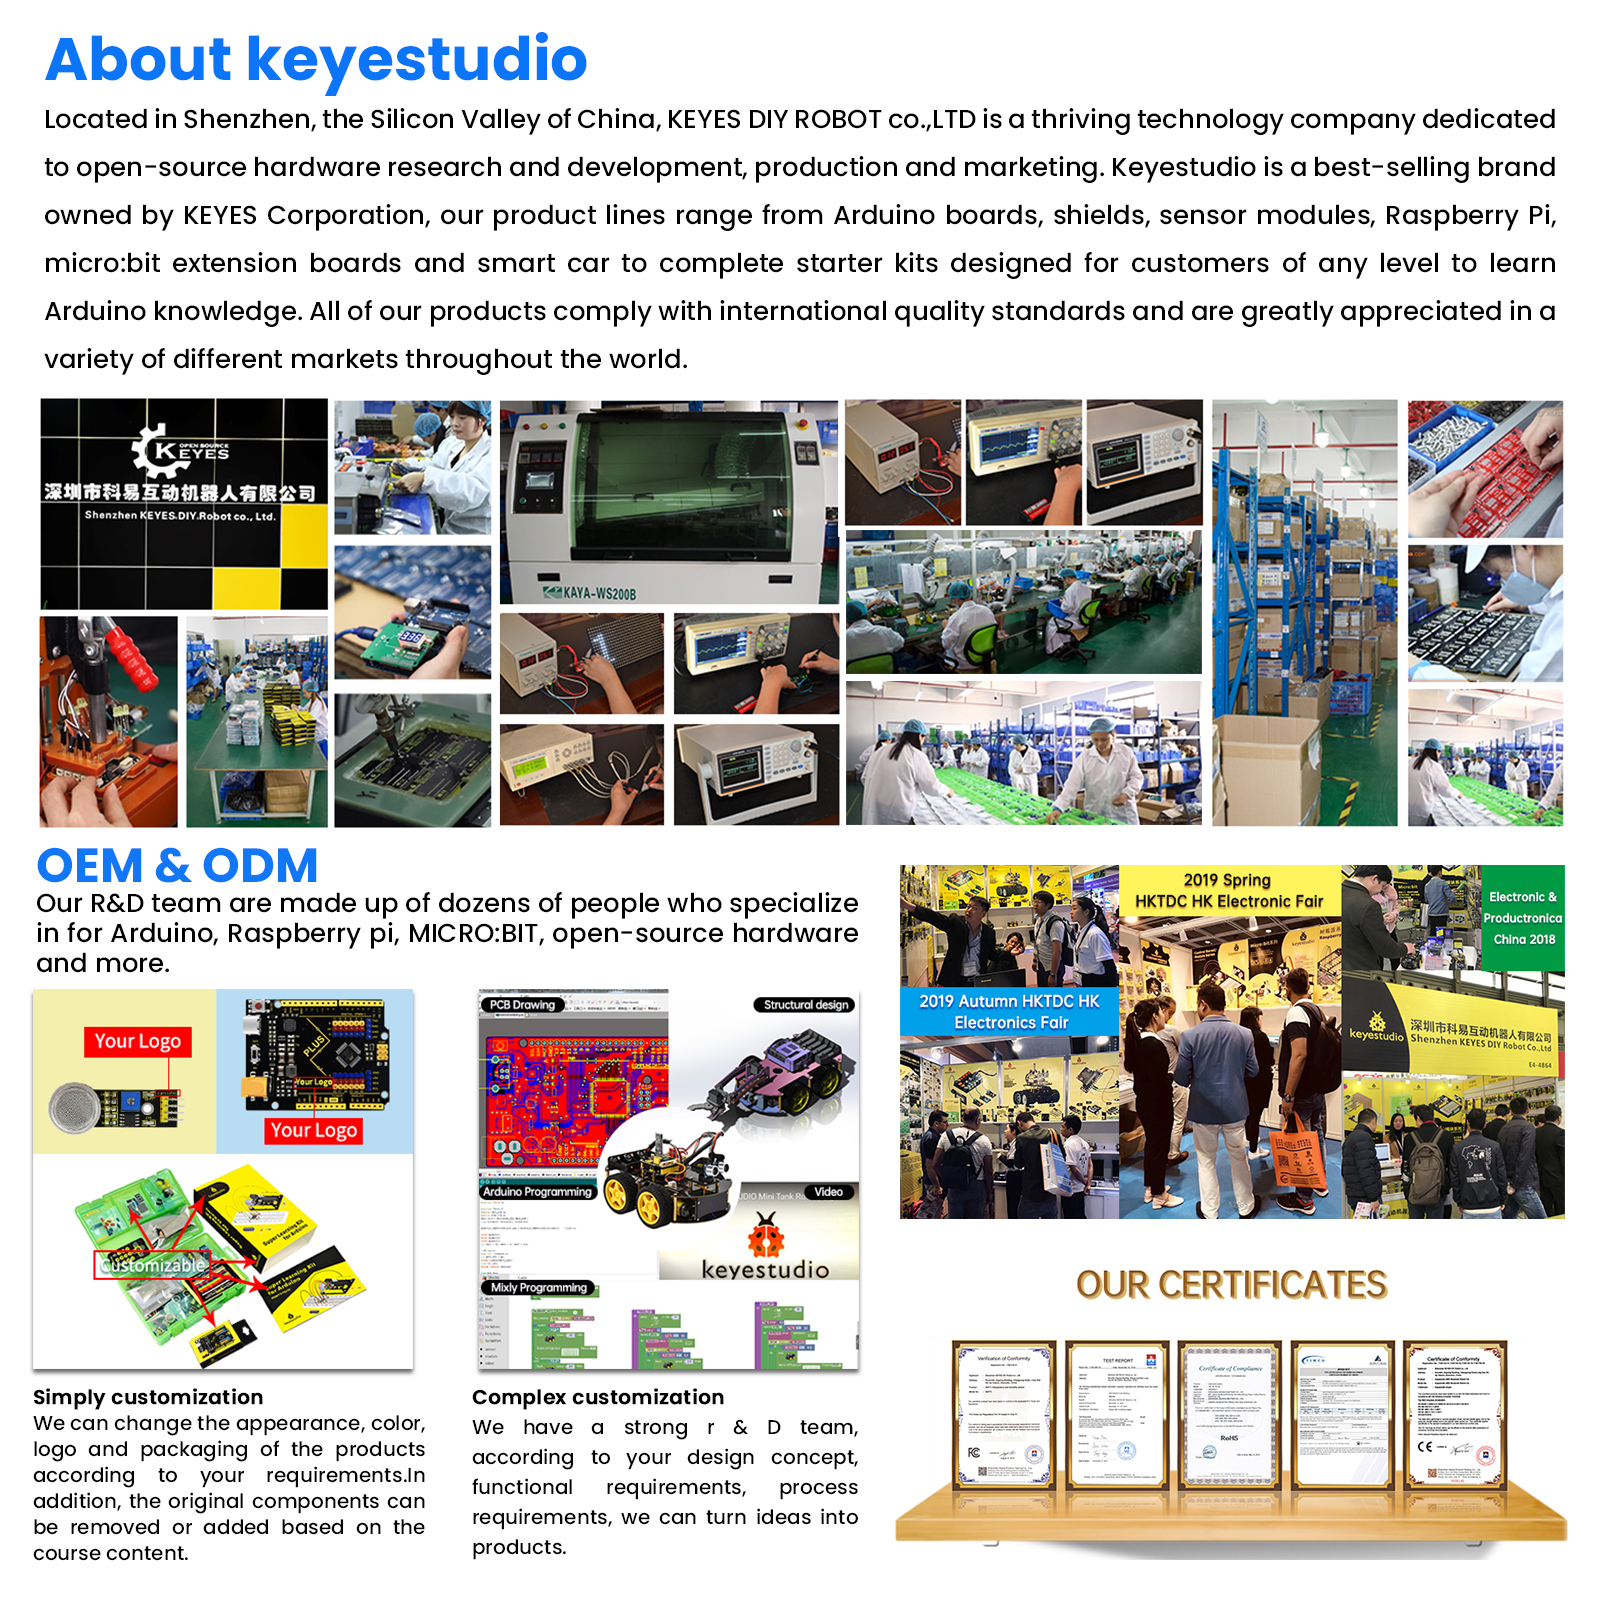 Keyestudio ESP32 37 in 1 Sensor Starter Kit DIY Education Kit For  MicroPython&Arduino Programming(59 Projects)